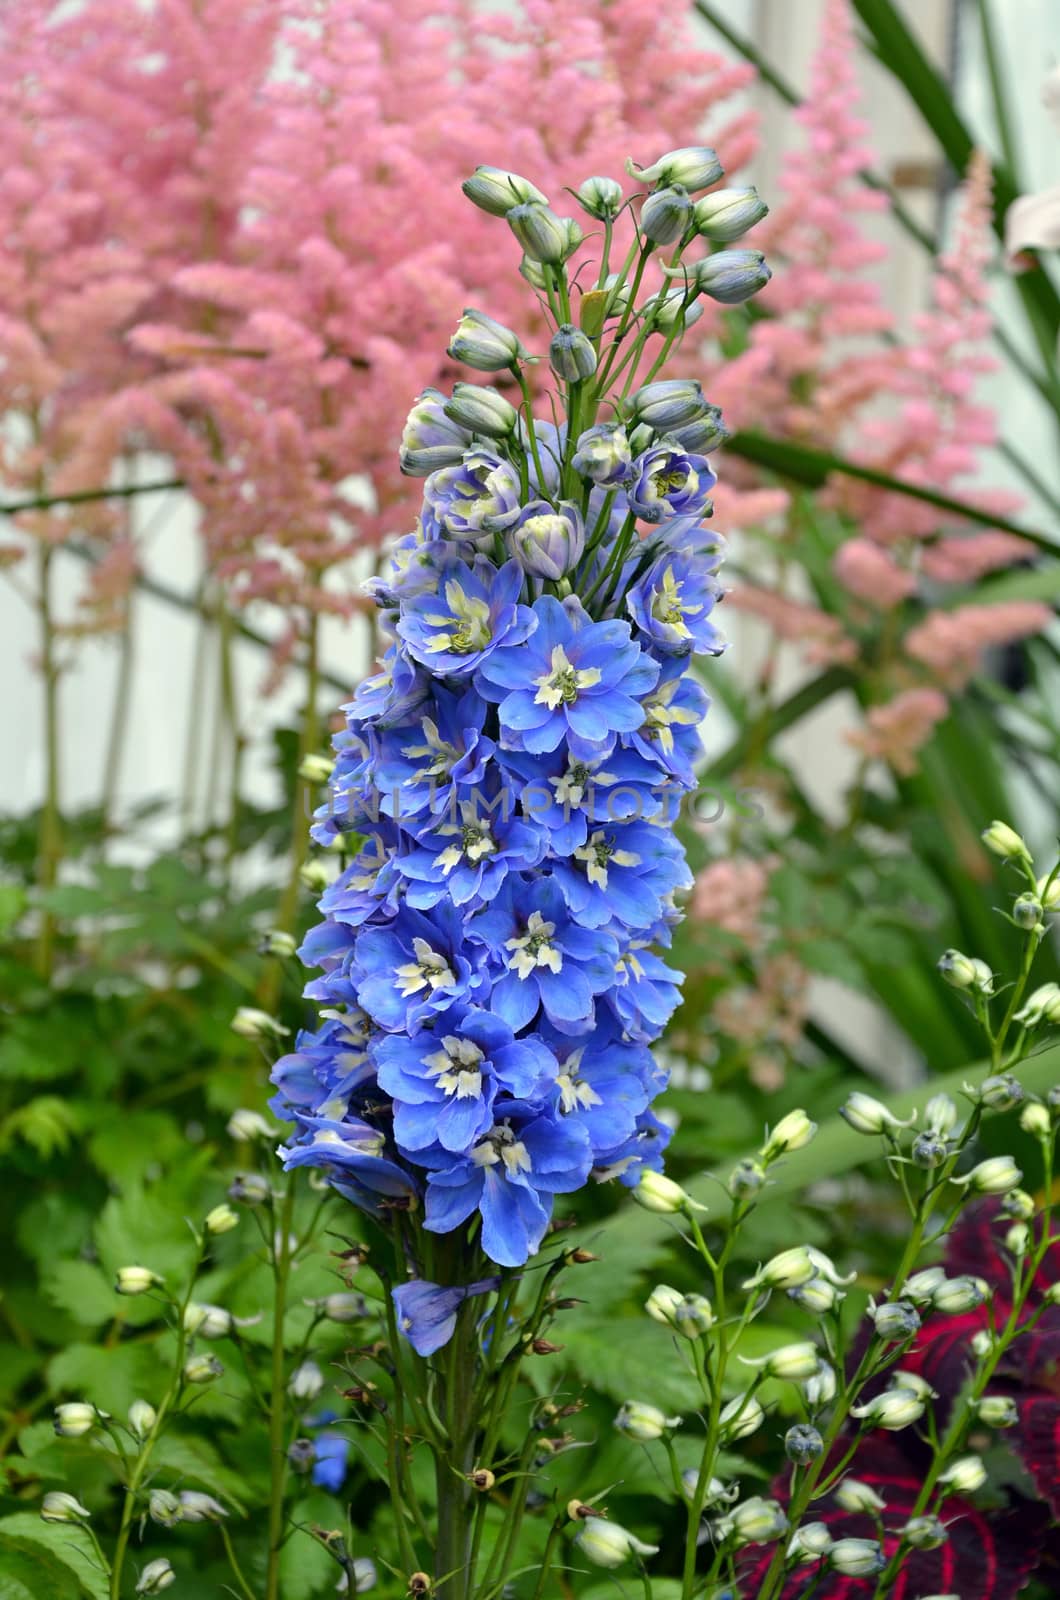 Beautiful blue delphinium flowers in full bloom